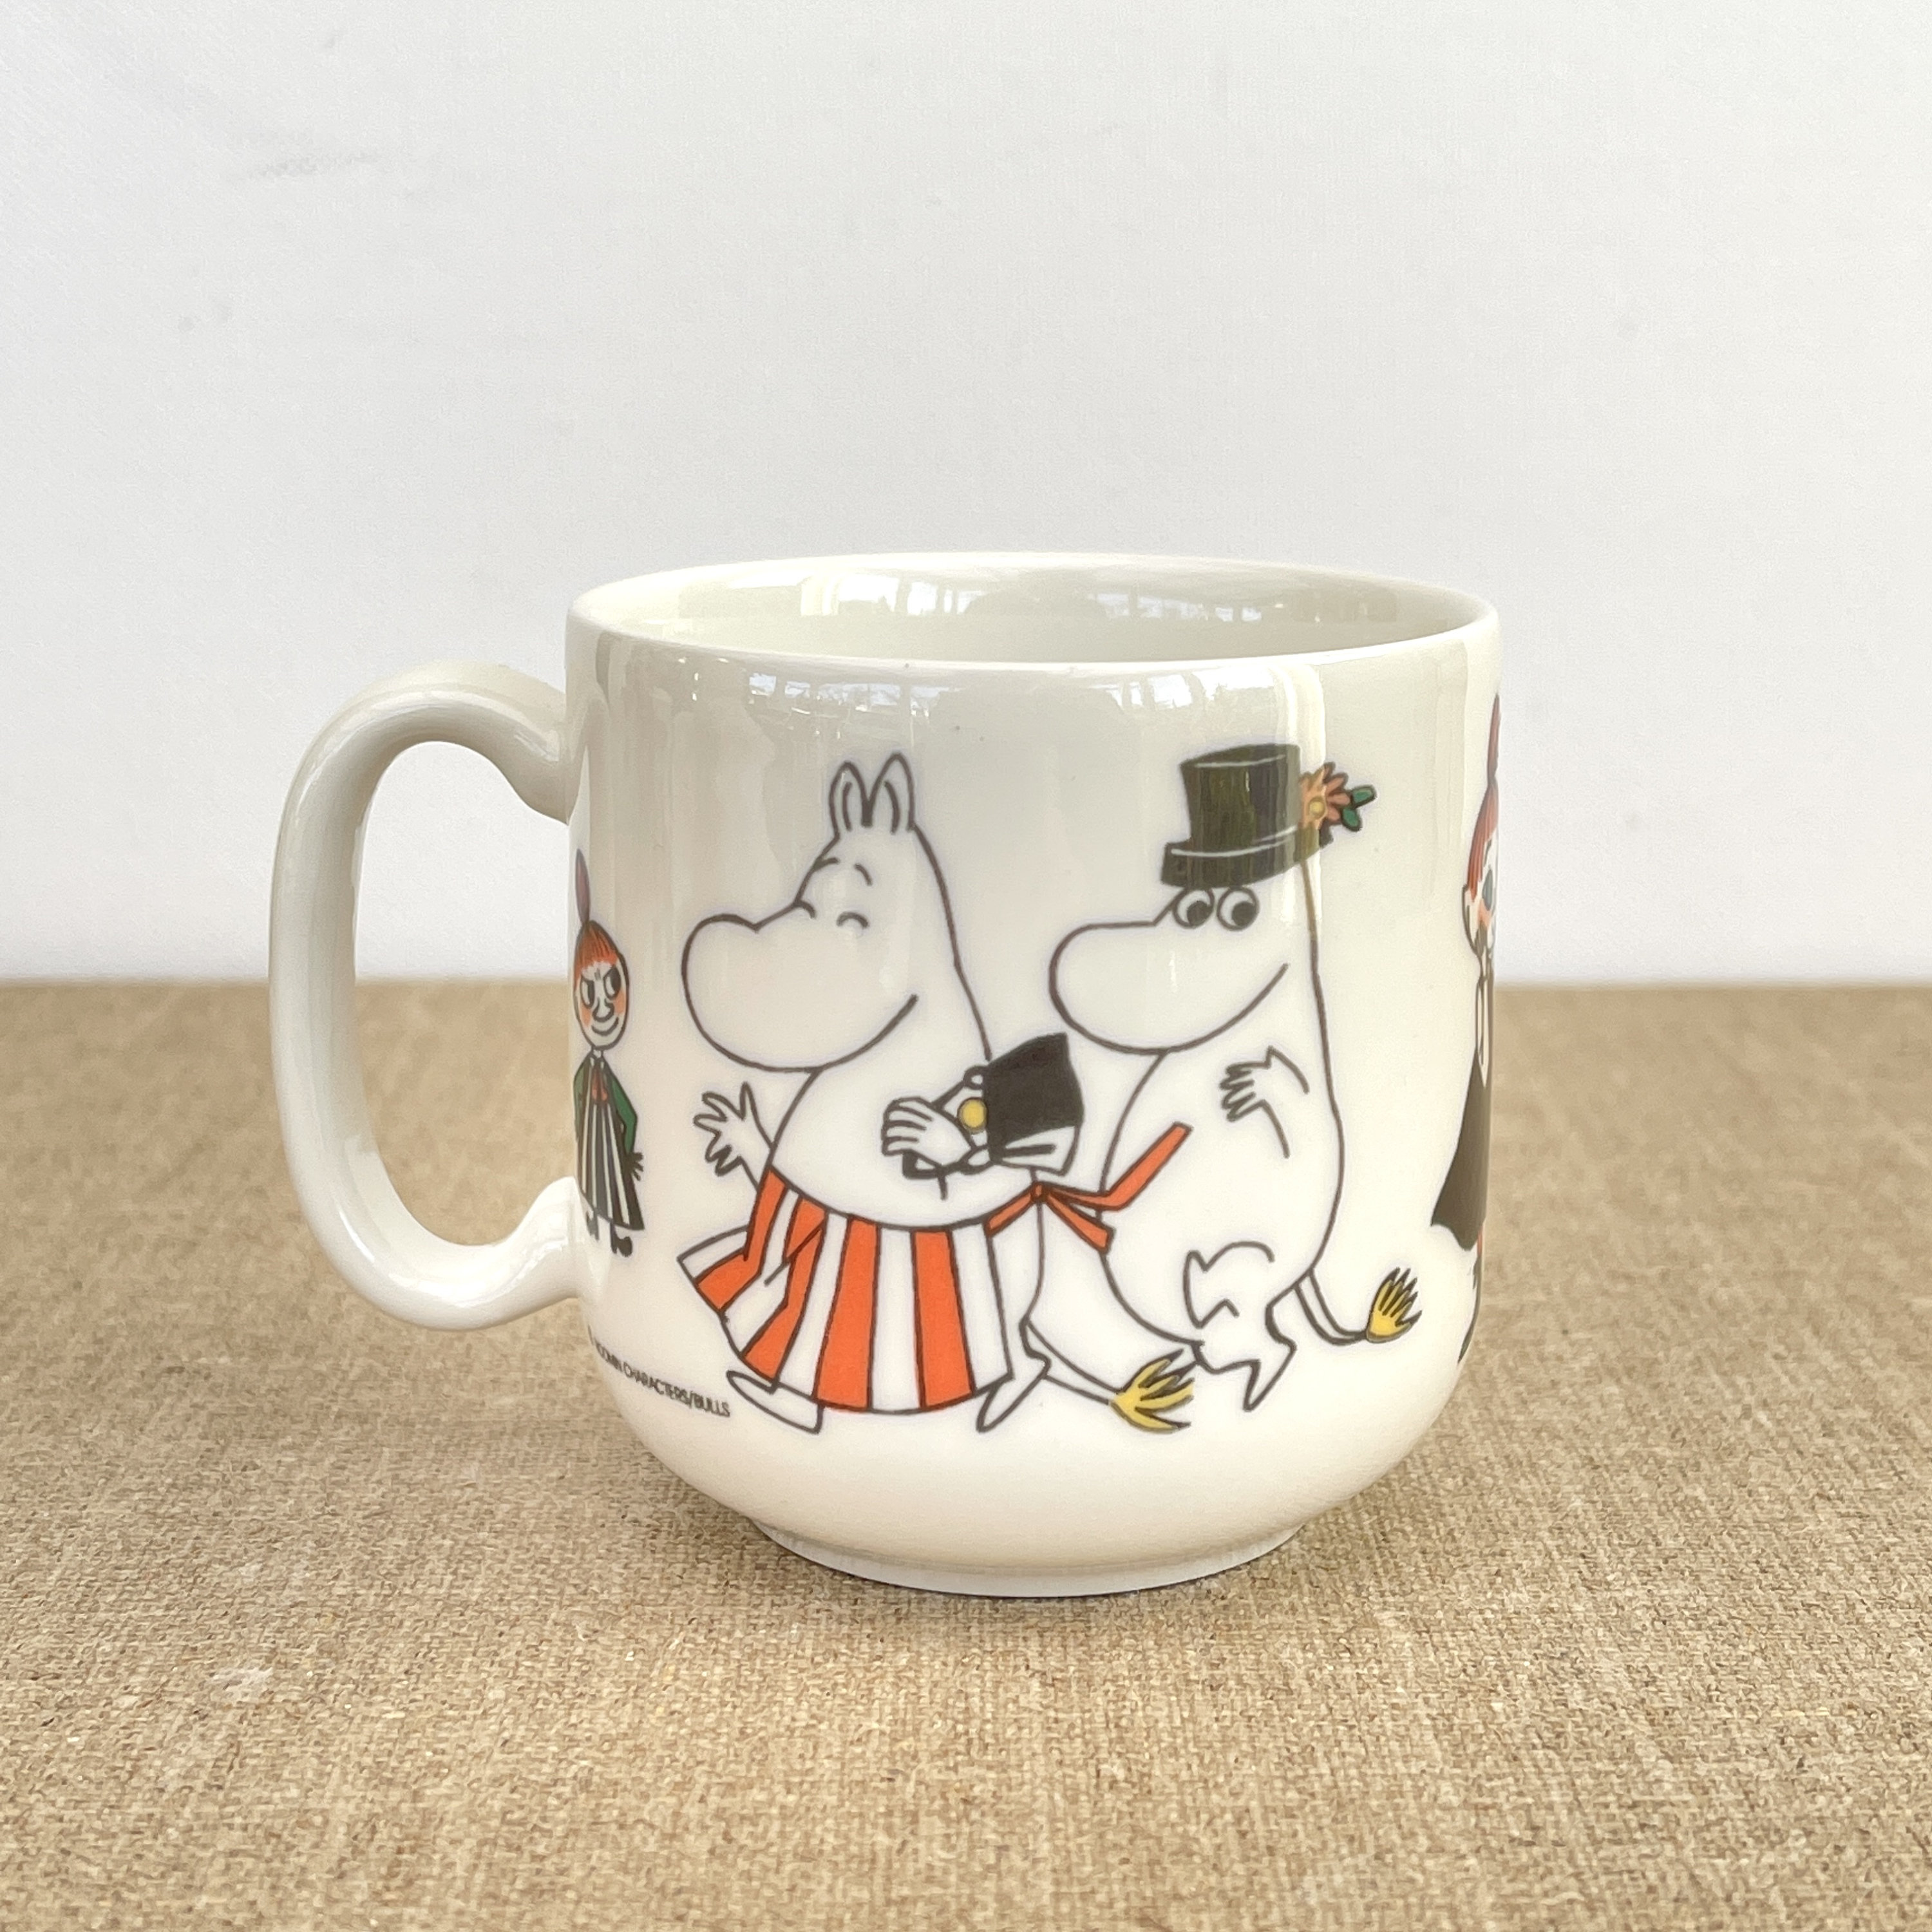 Arabia Moomin Mug/Porcelaine Objet de Collection Millésime Finlandais Made in Finland Dessin Animé